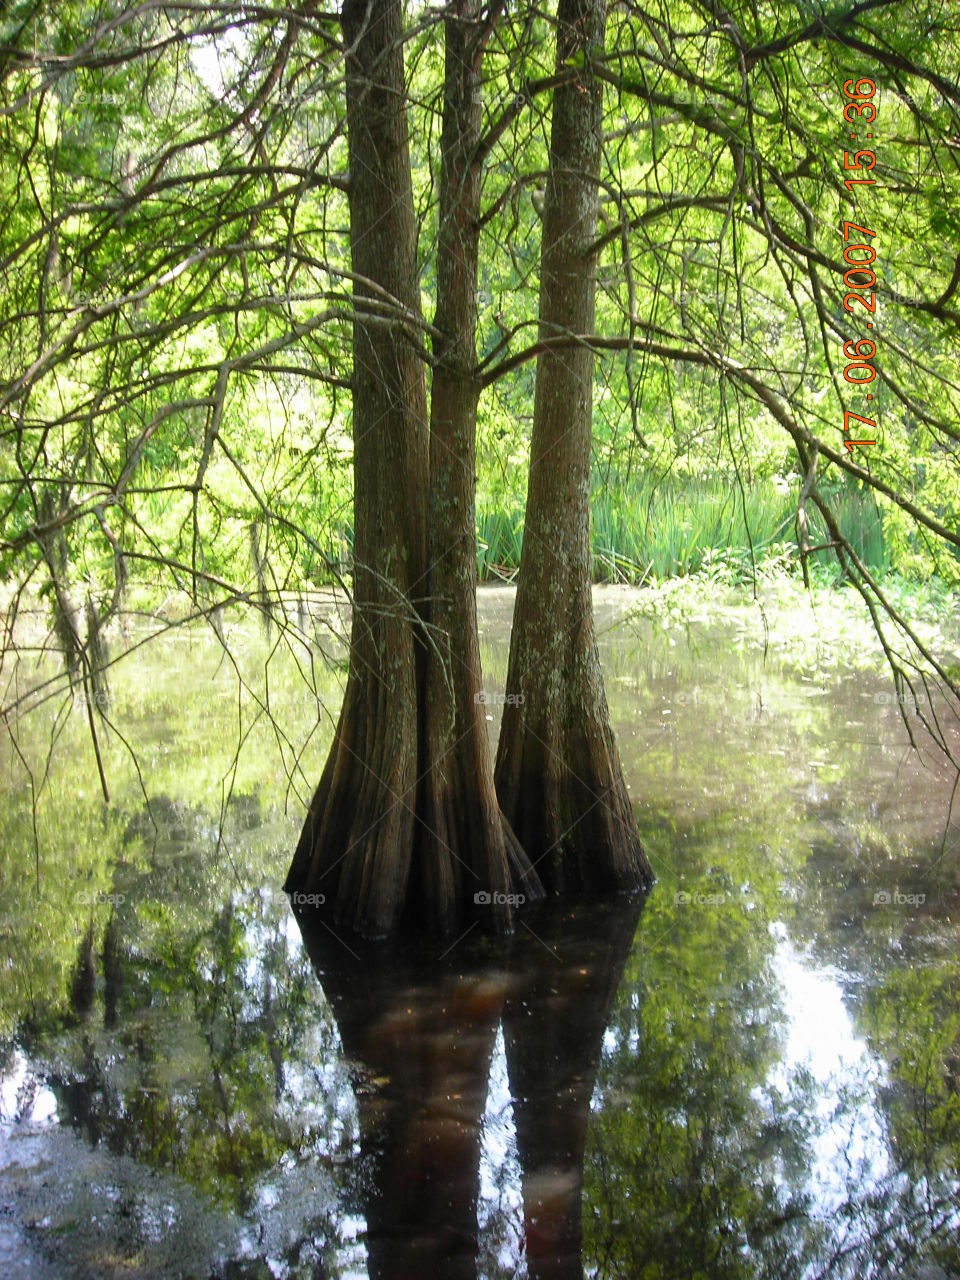 Swamp views of beauty